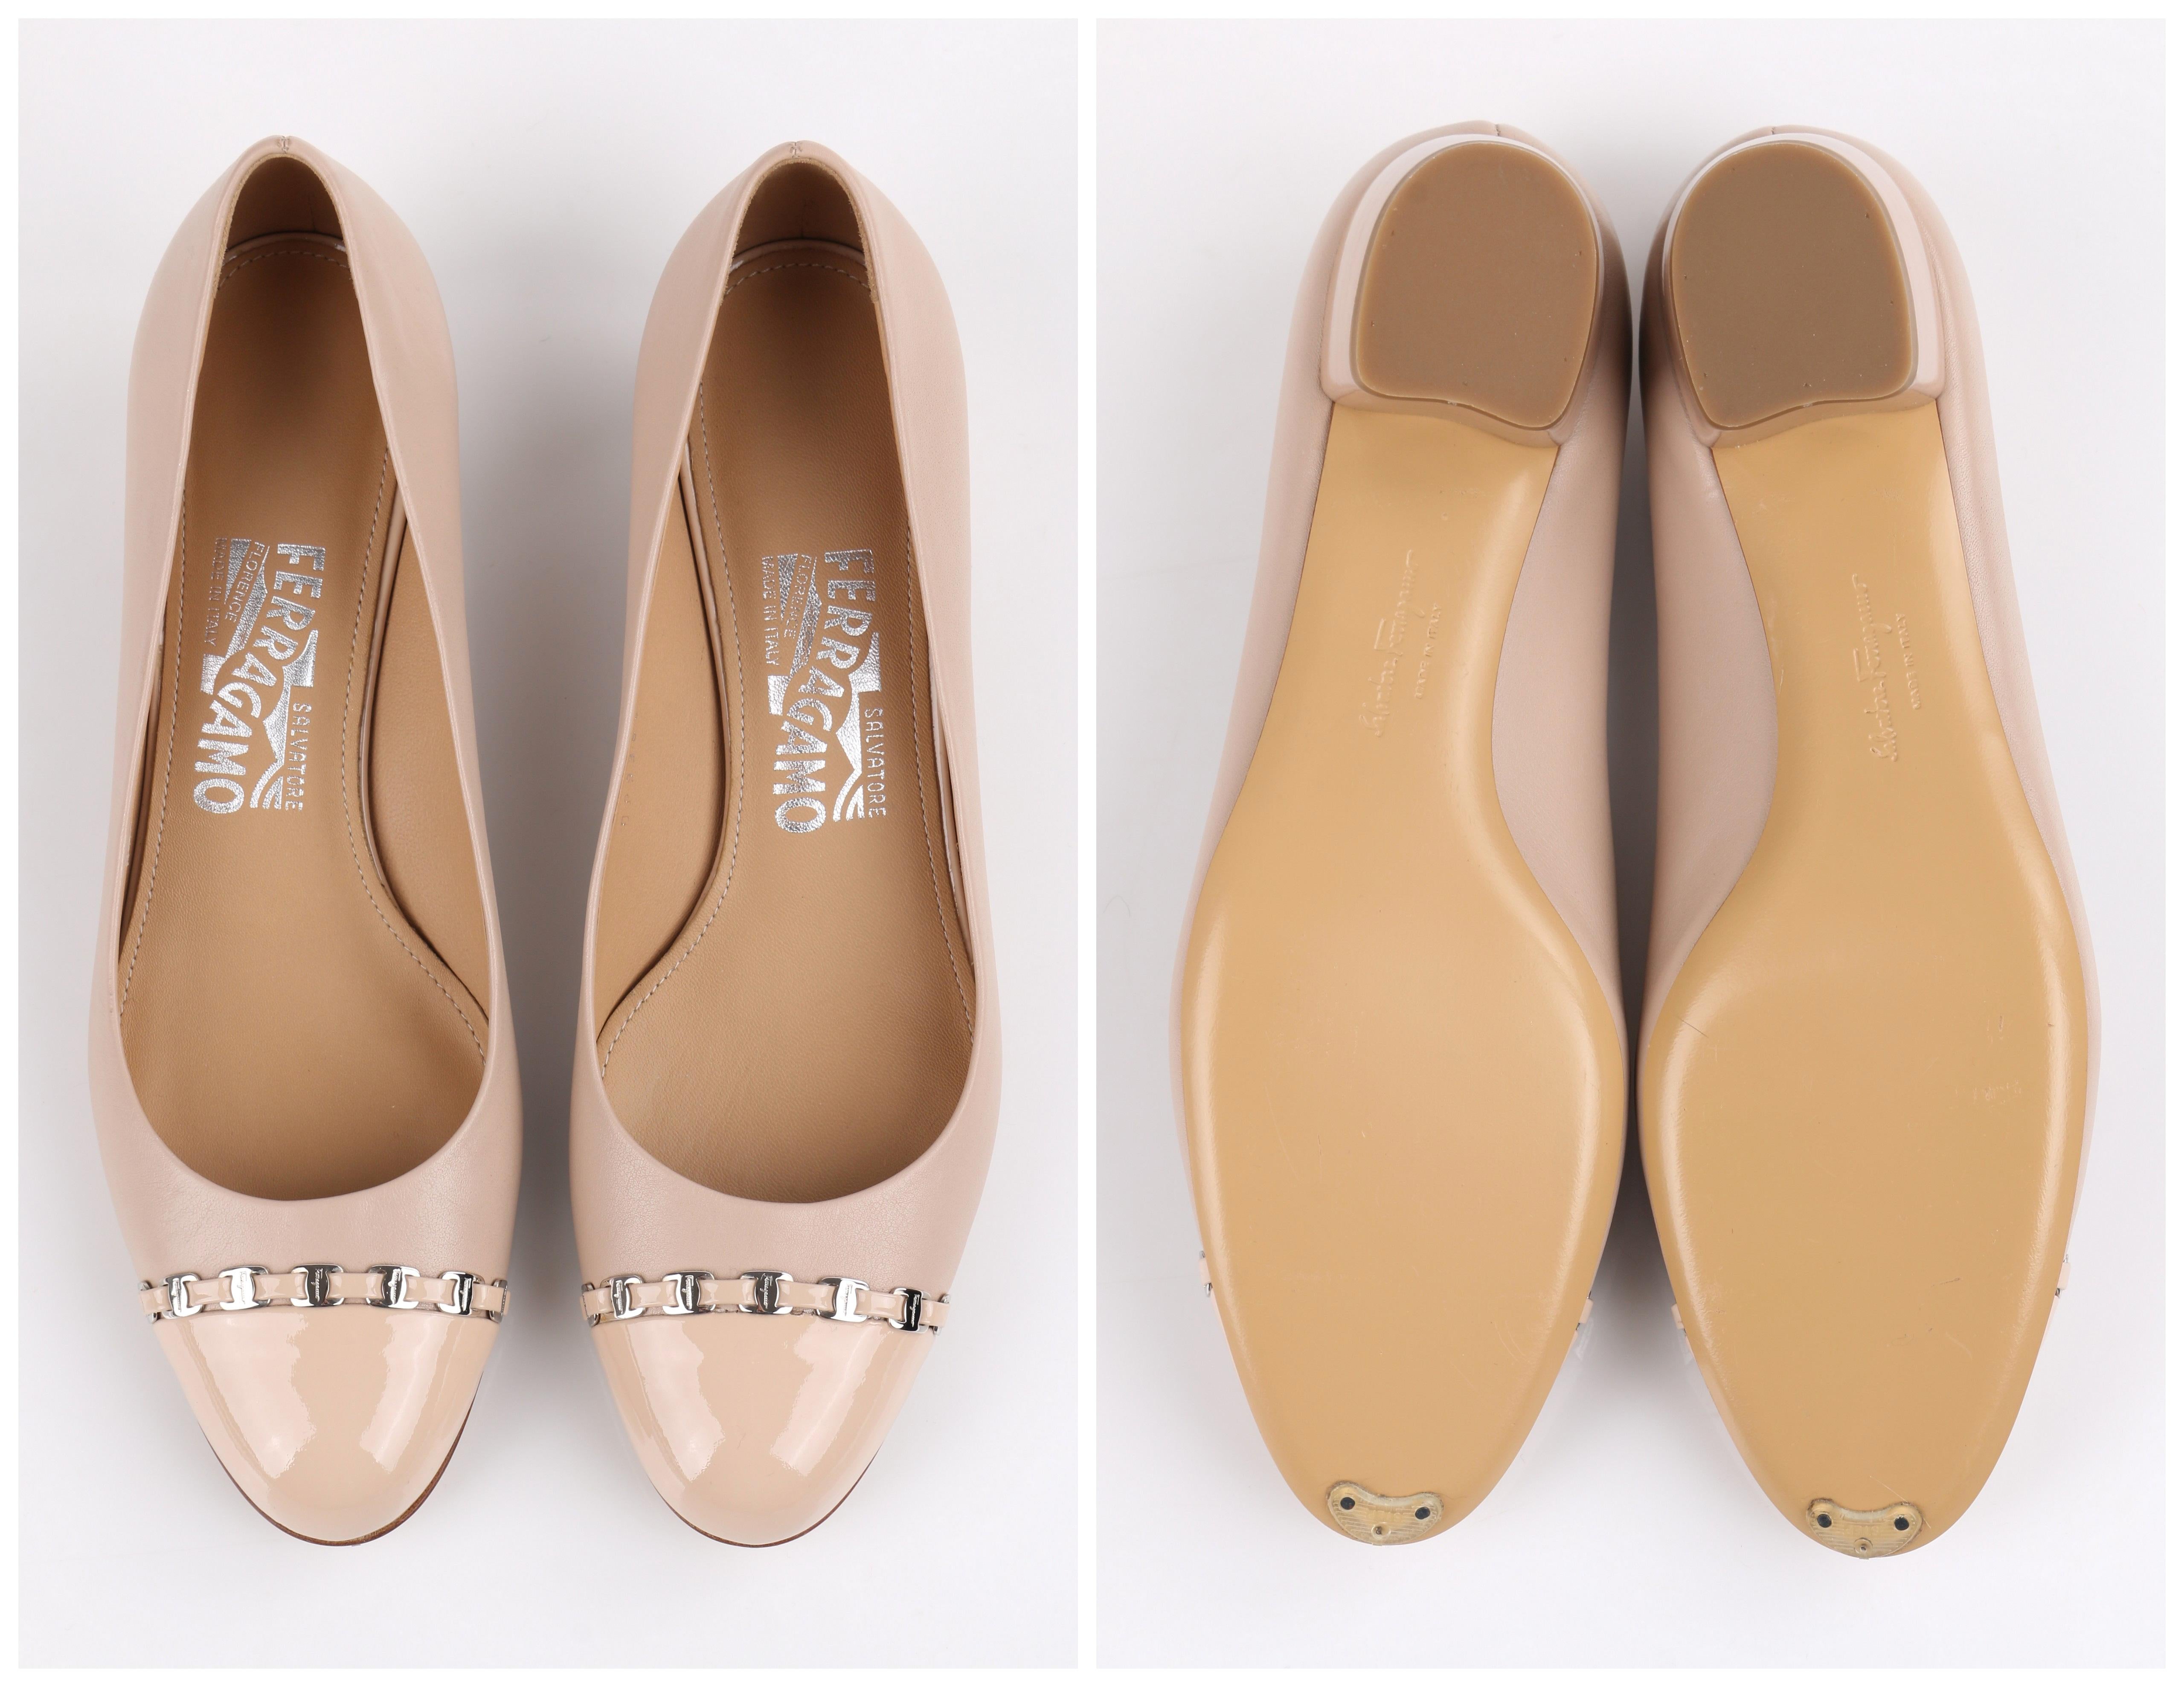 Women's SALVATORE FERRAGAMO “Pim” Nude Patent Leather Silver Chain Pump Heel Size 7.5 